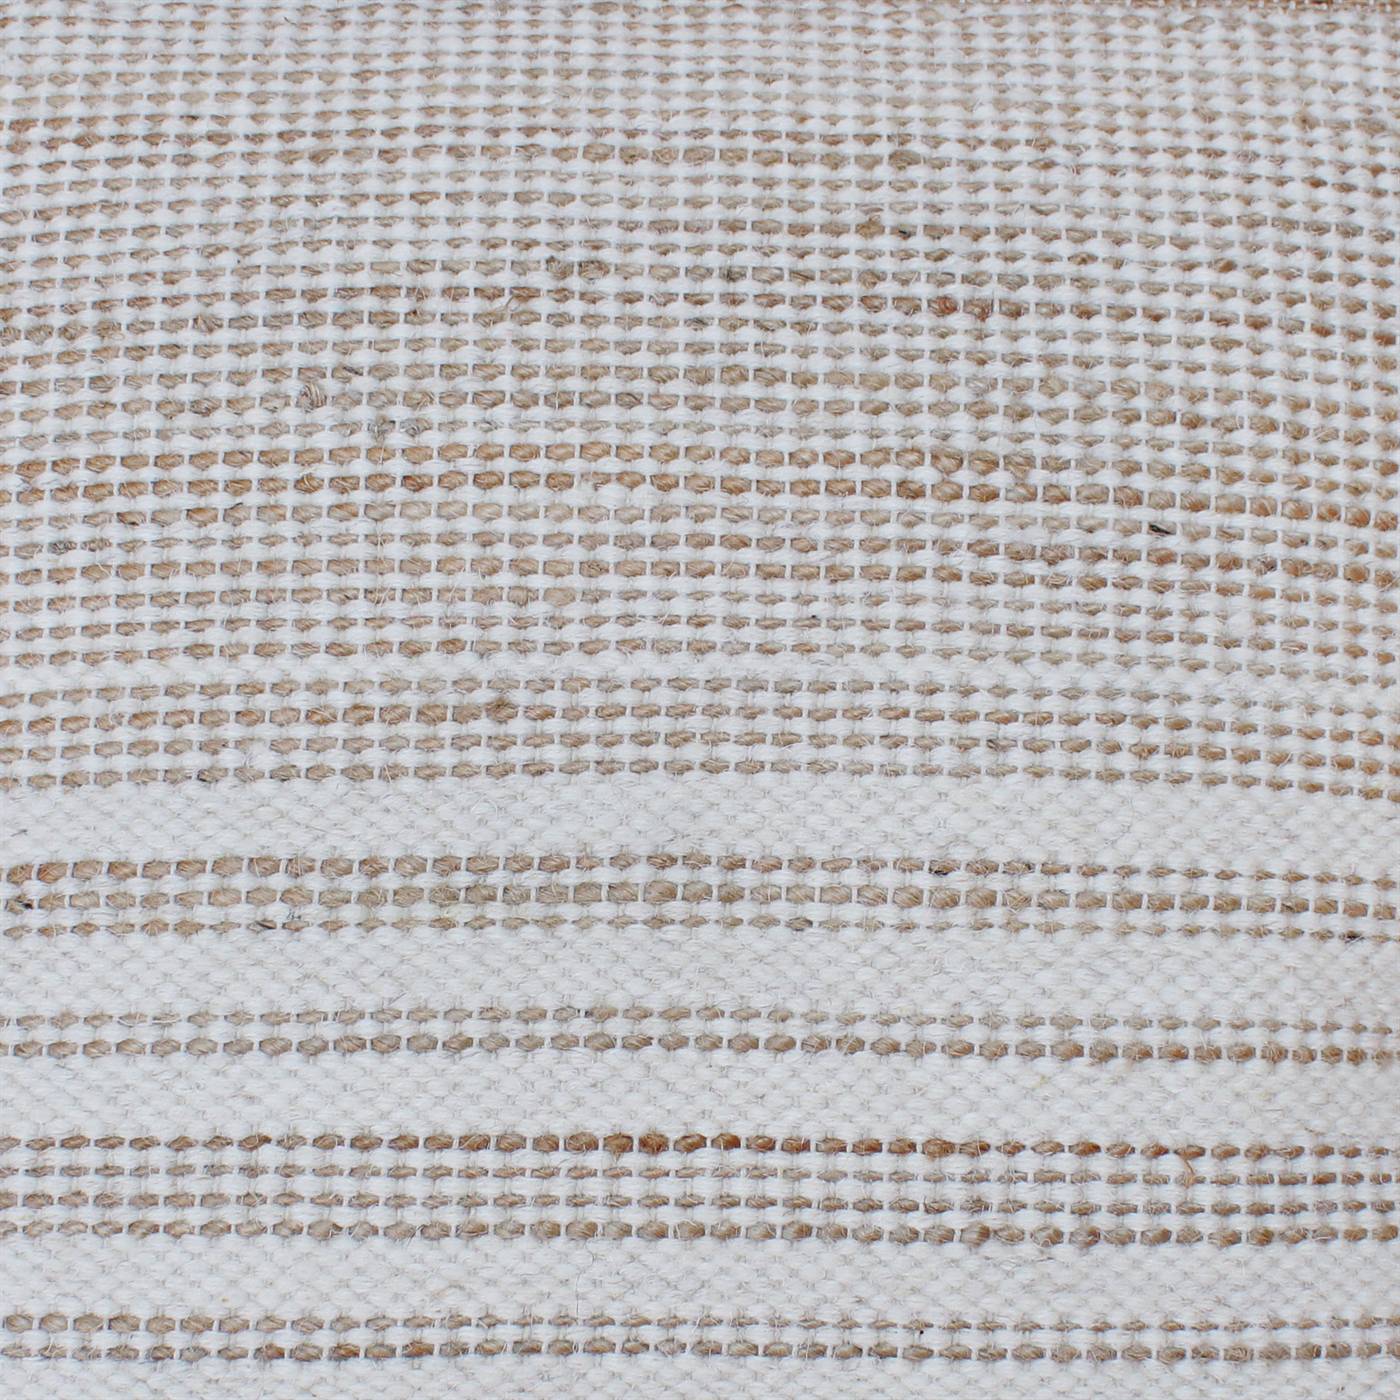 Pukara Cushion, 56x56 cm, Natural White, Natural, Jute, Wool, Hand Woven, Pitloom, Flat Weave